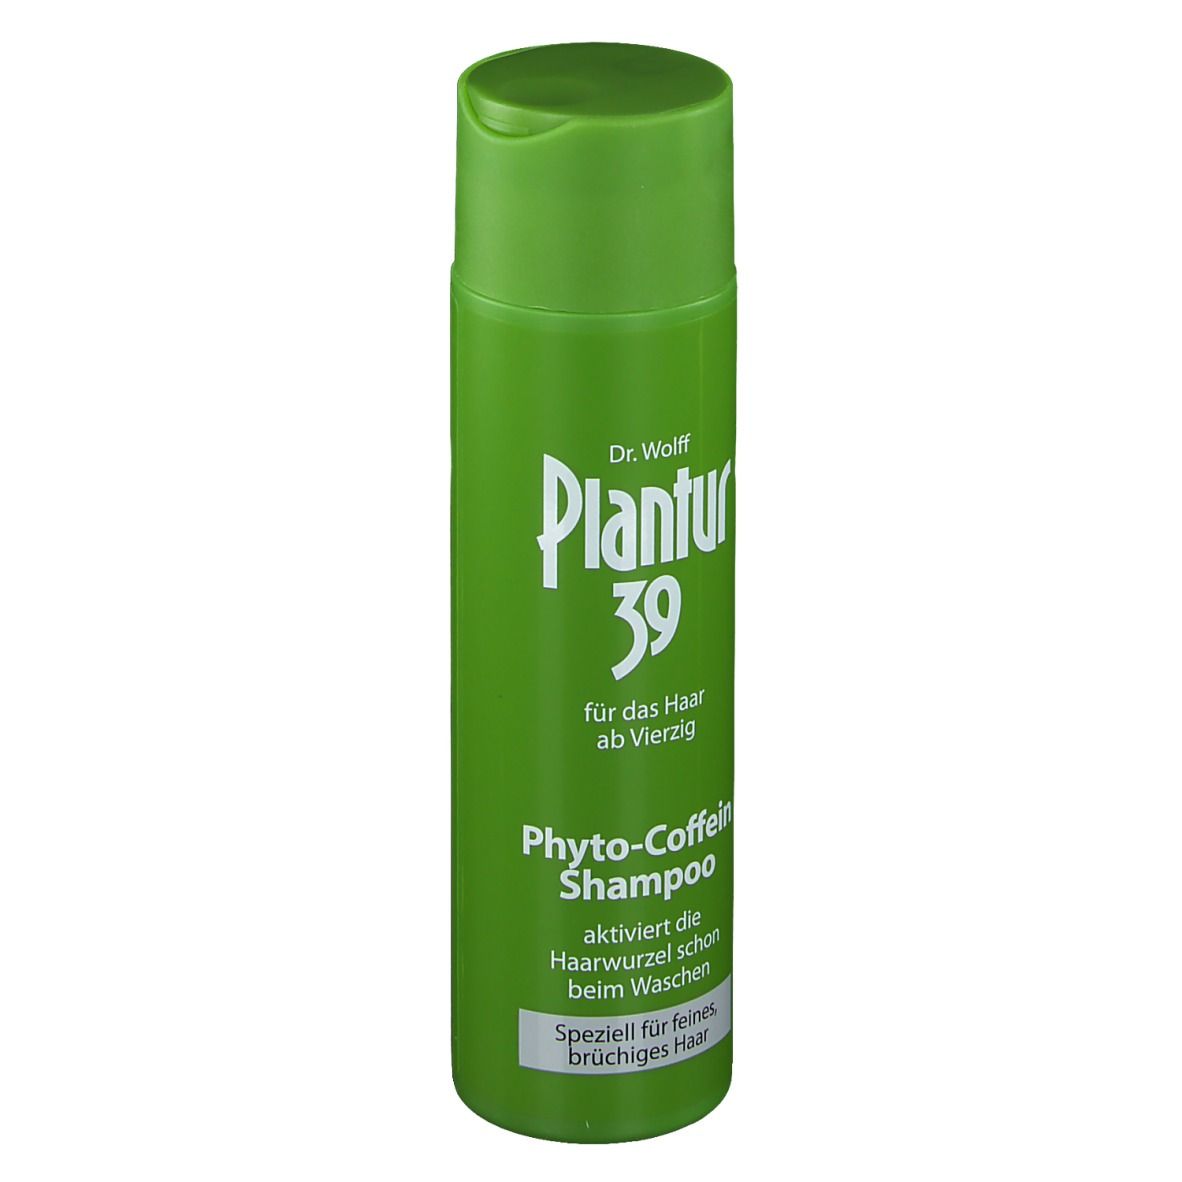 Plantur 39 Phyto-Coffein-Shampoo